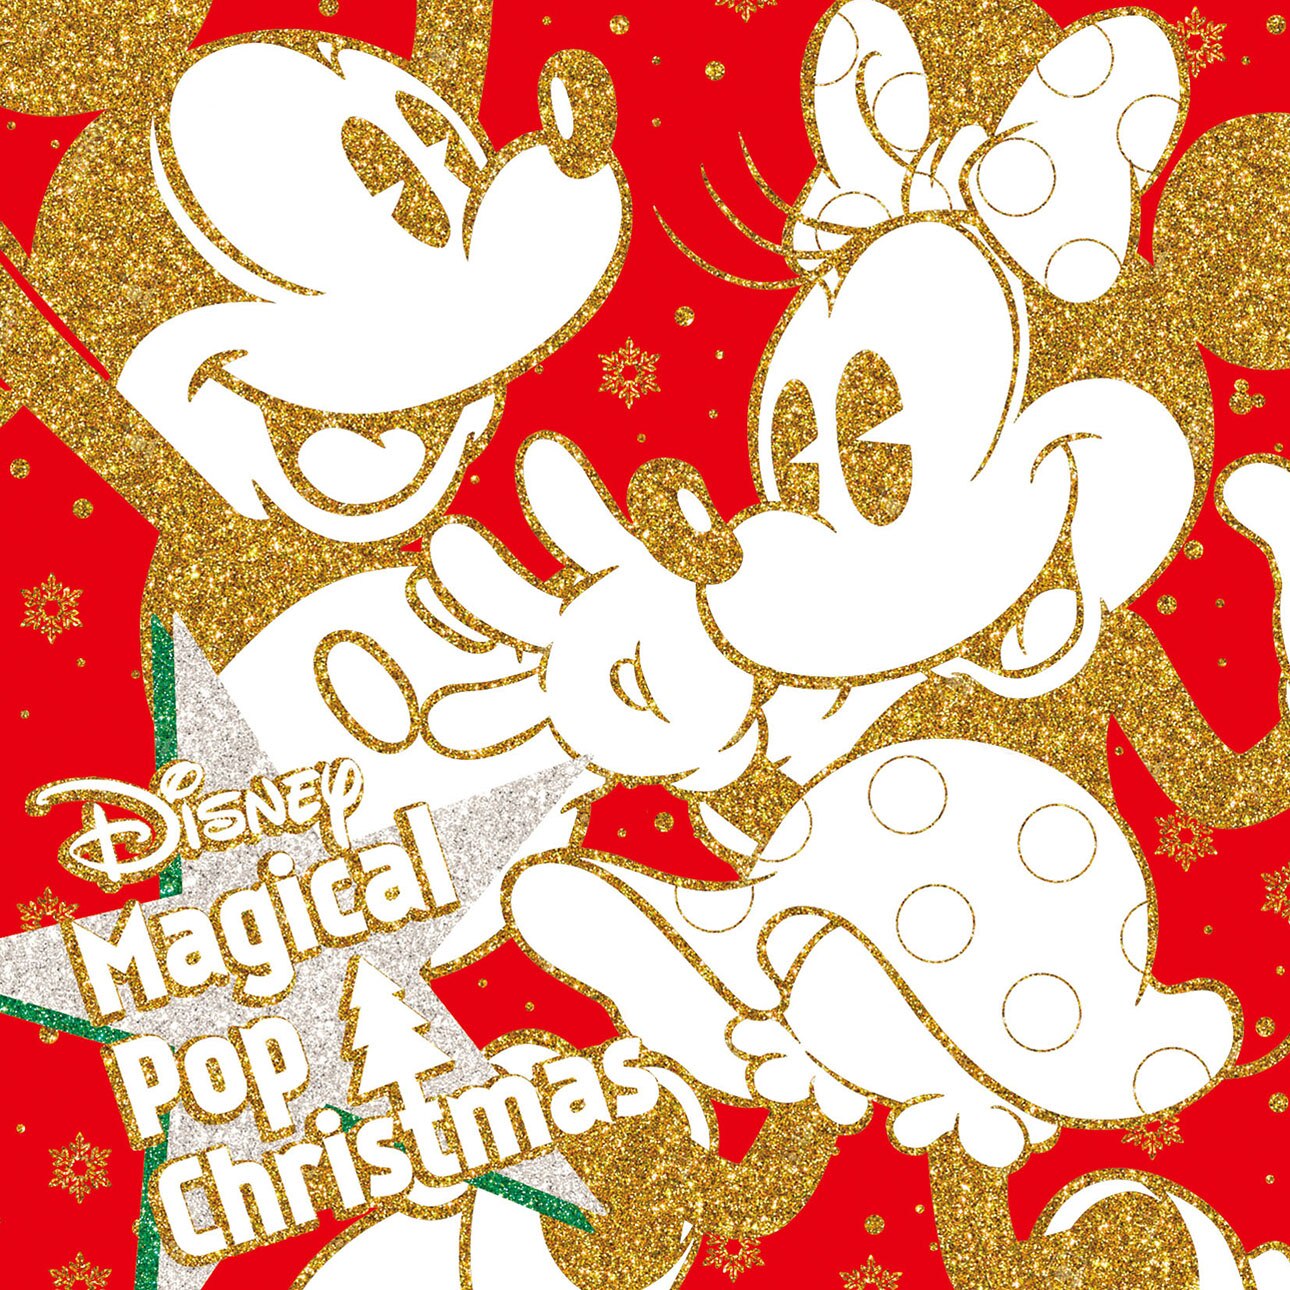 News ディズニー クリスマス カバーアルバム Disney Magical Pop Christmas 遂に明日発売 全曲配信 青野紗穂